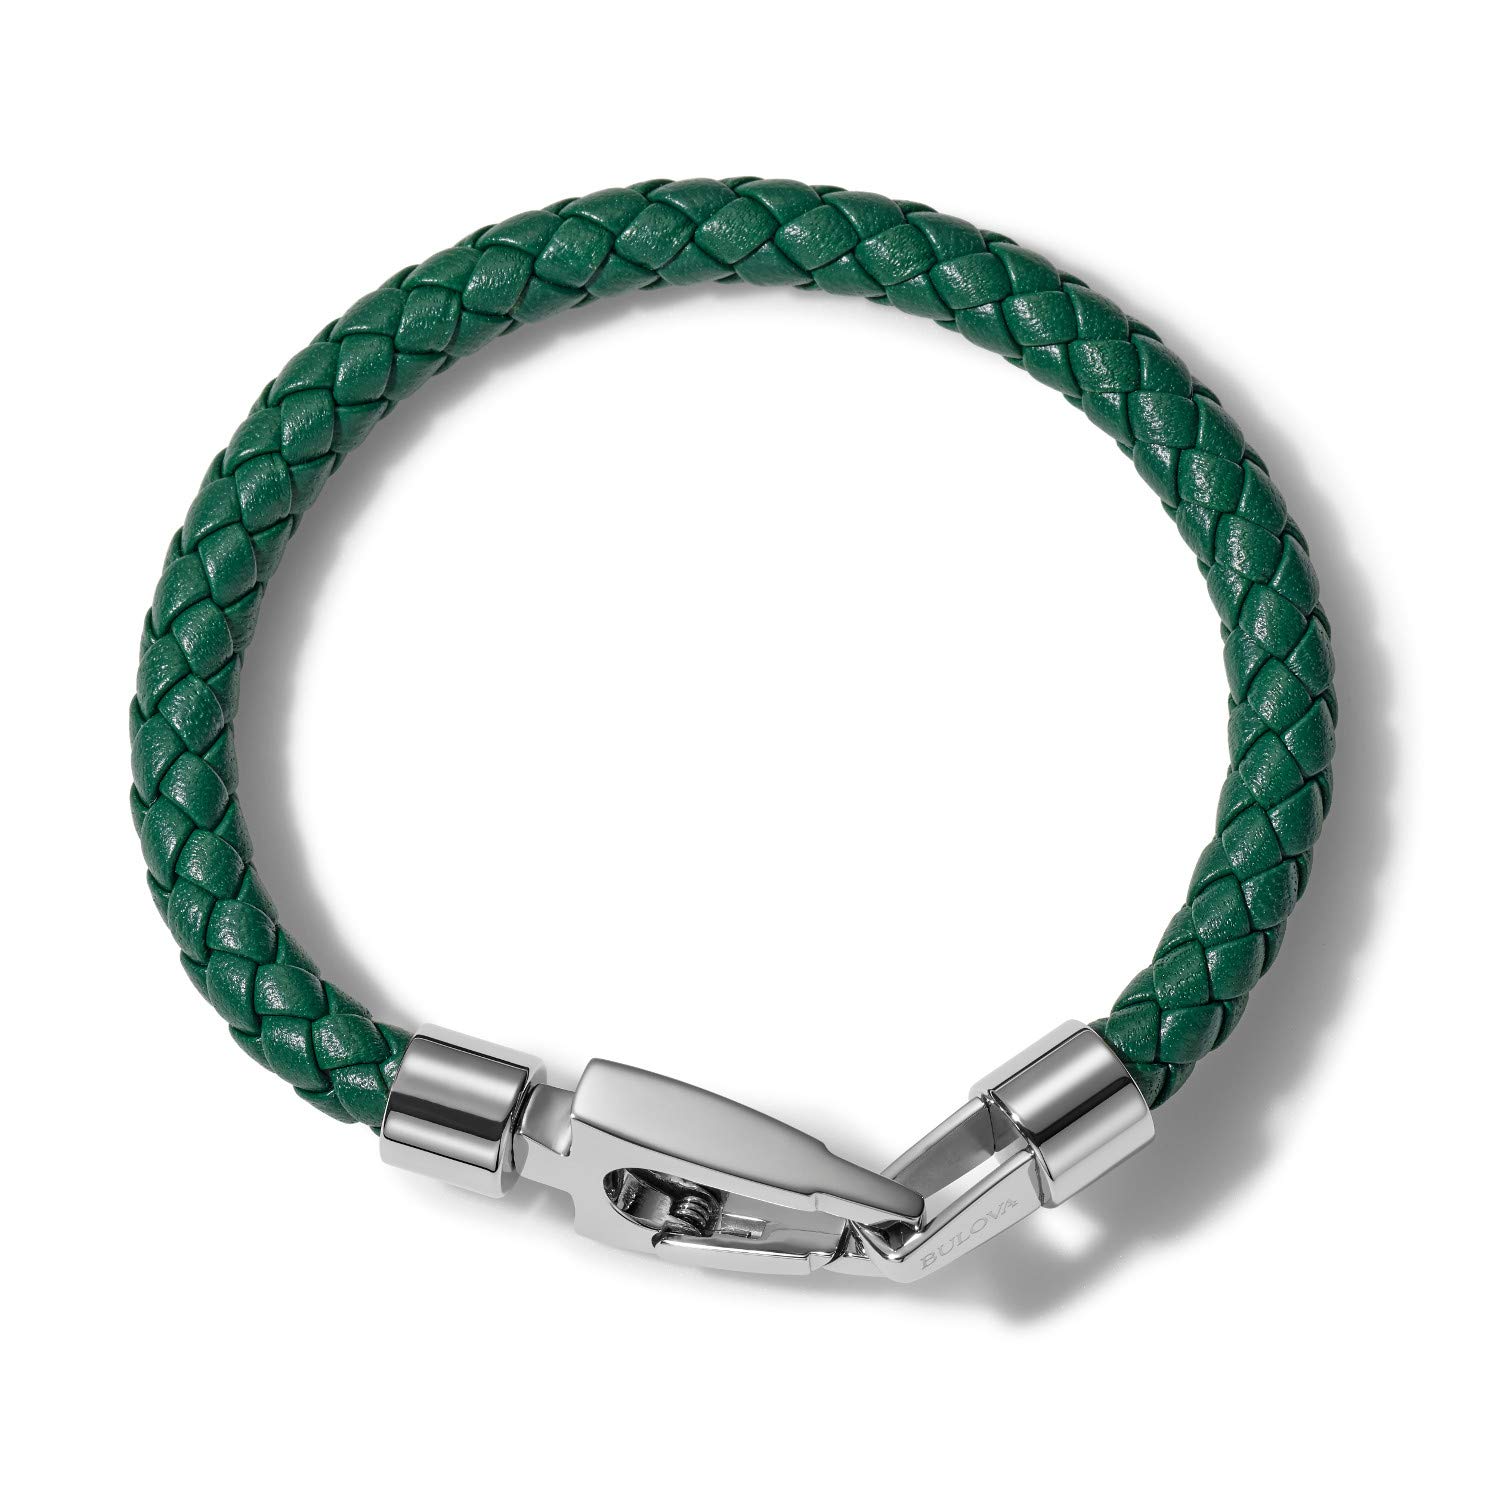 Bulova Jewelry Men's Marine Star Braided Leather Bracelet with Tuning Fork Clasp